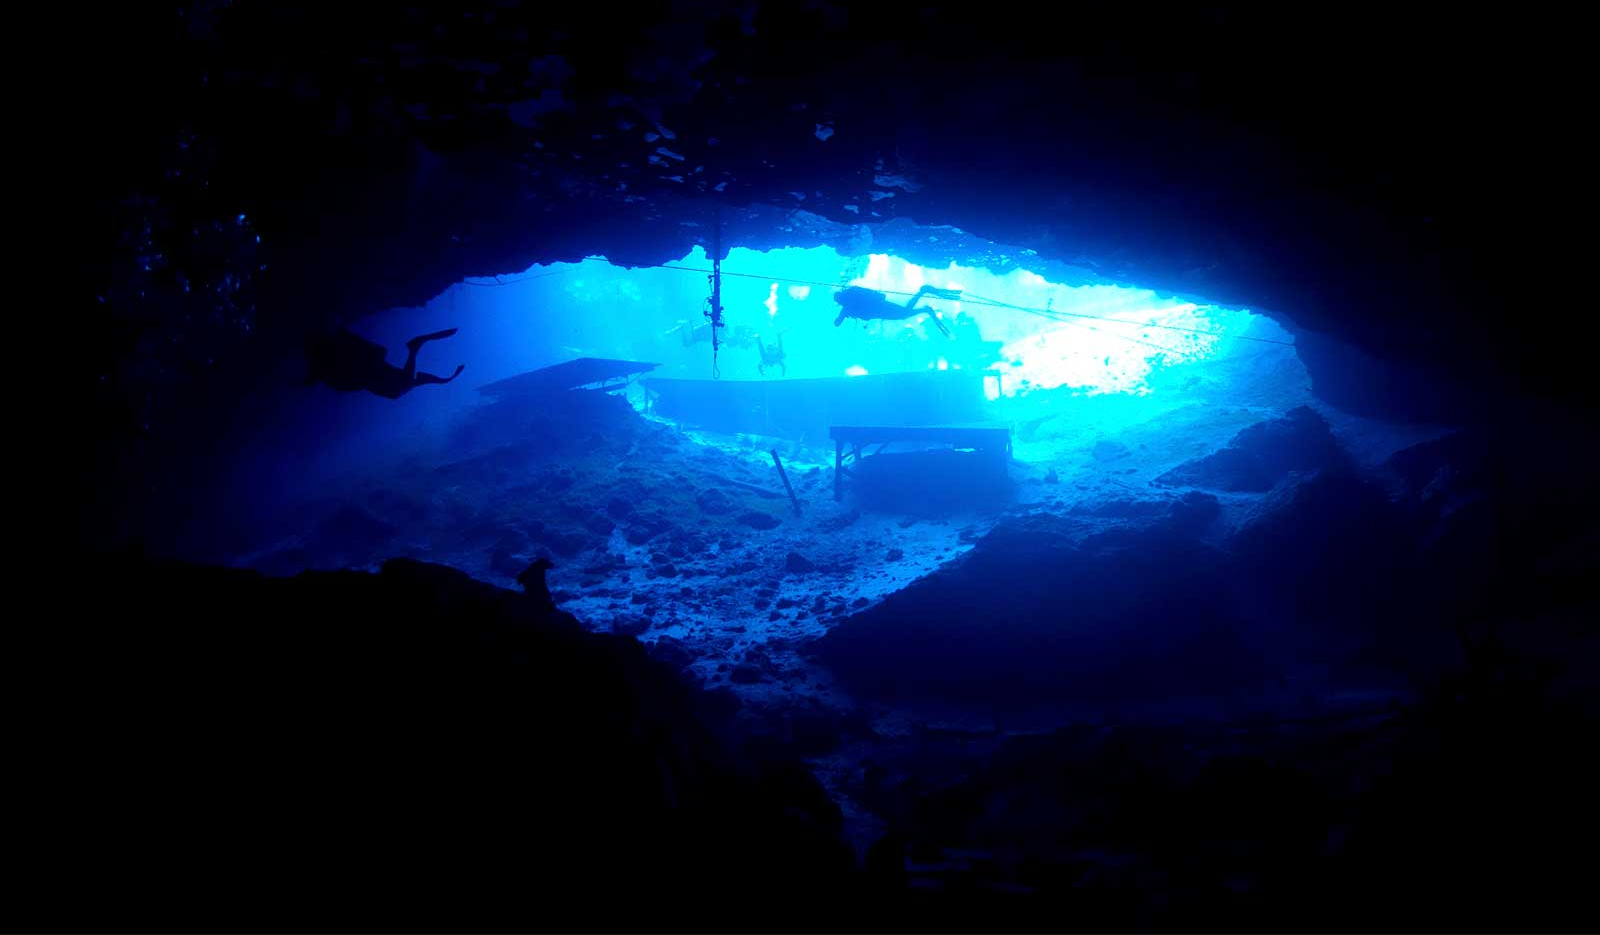 cavern = 크고 깊은 동굴